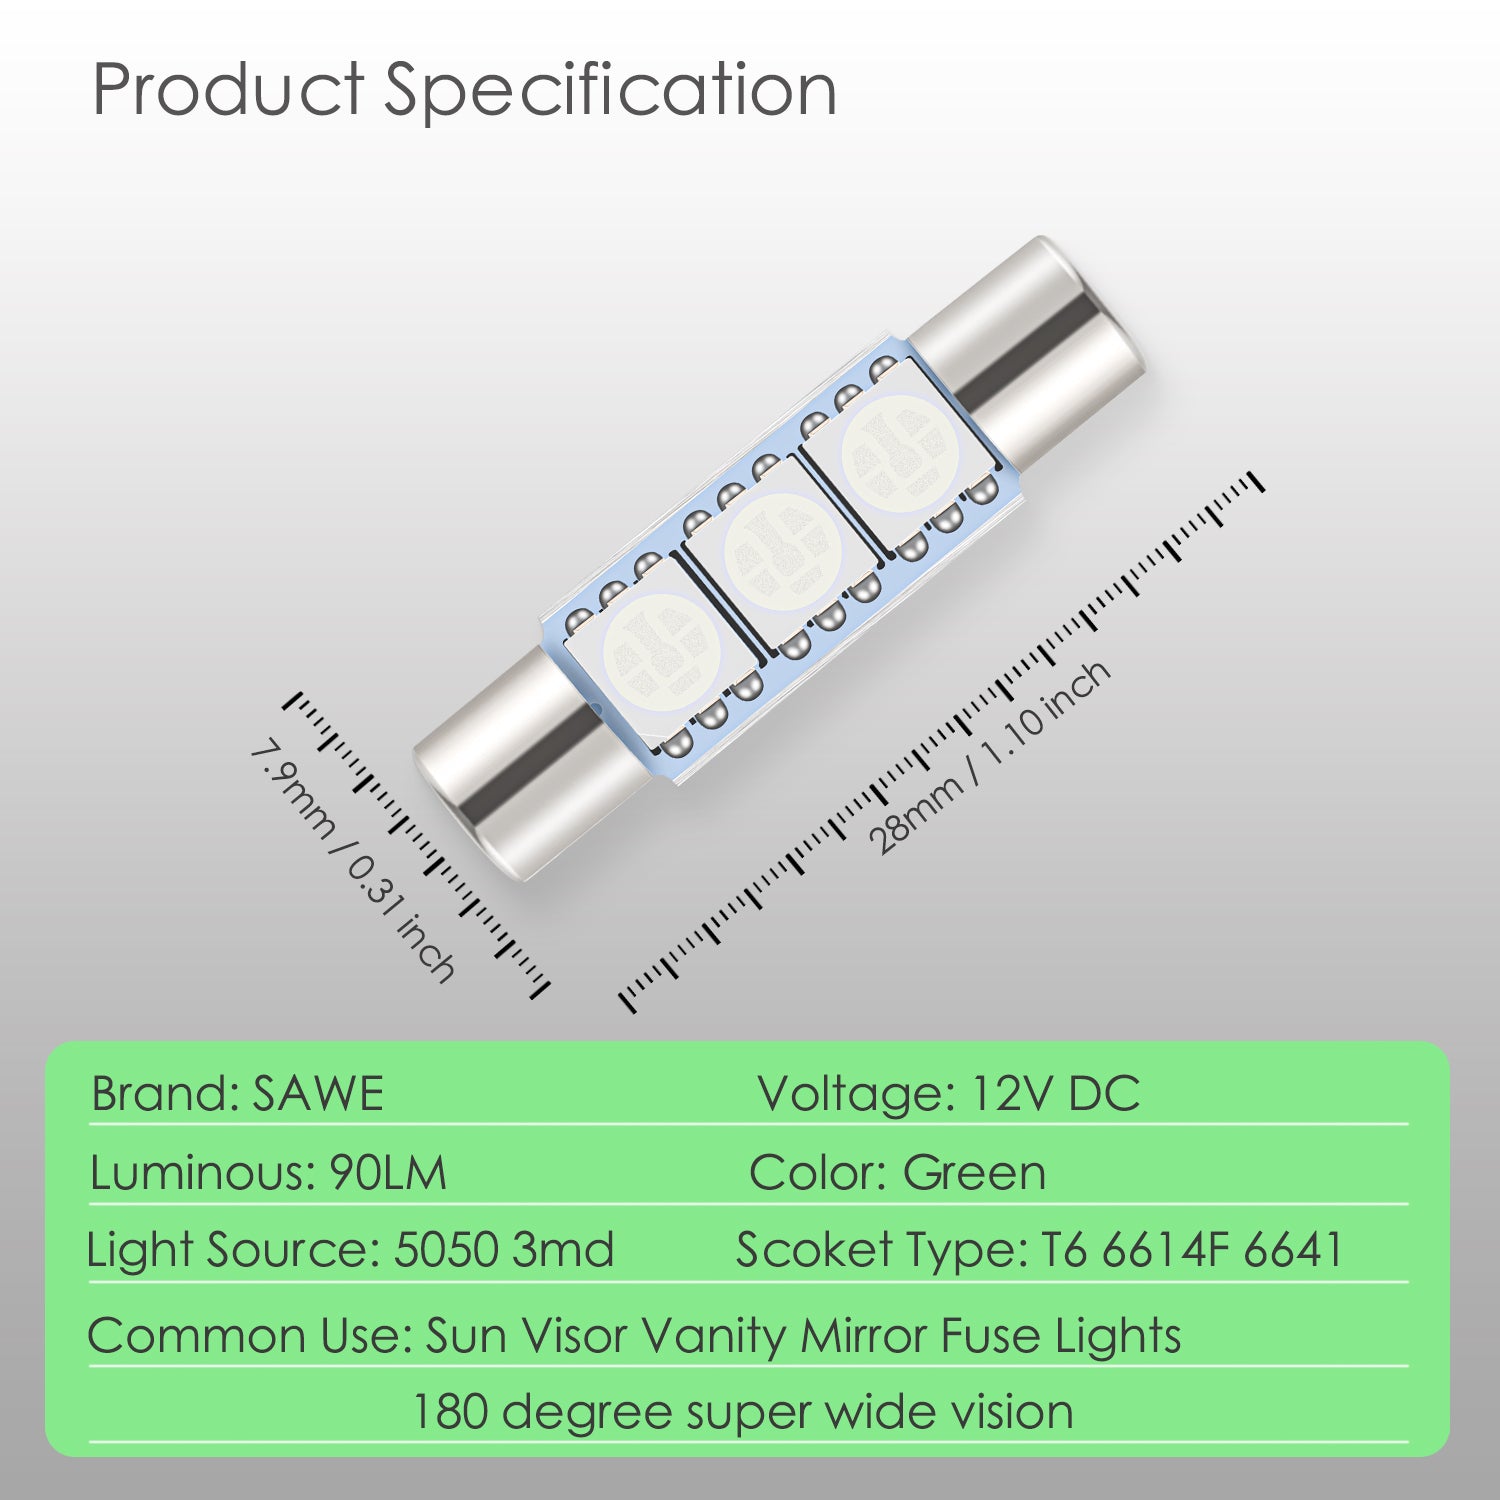 SAWE ® 28mm 3SMD T6 6641 LED Bulbs Sun Visor Vanity Mirror Fuse Lights - Green